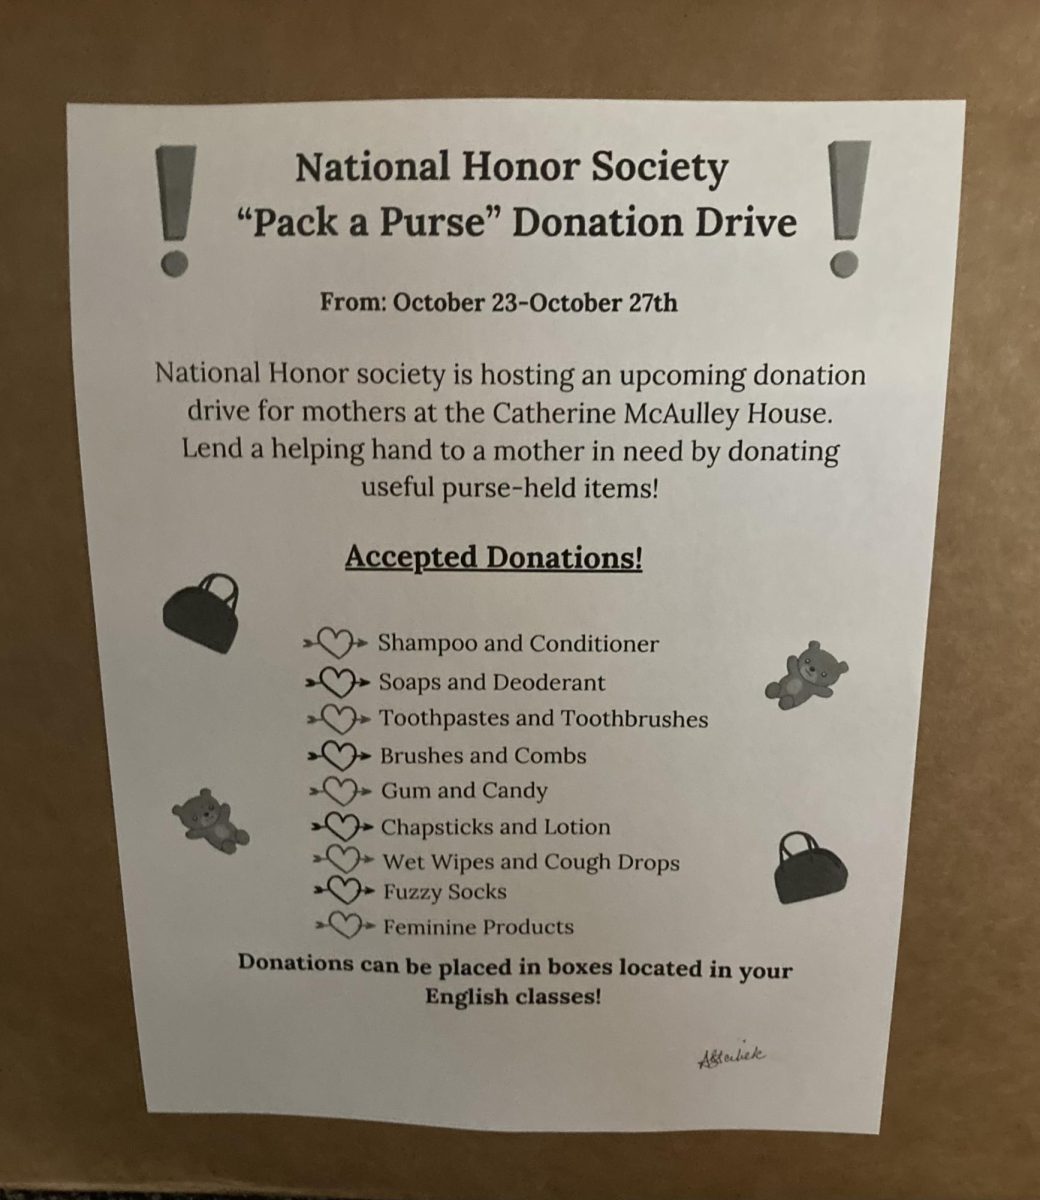 National Honor Society Donation Drive flyer